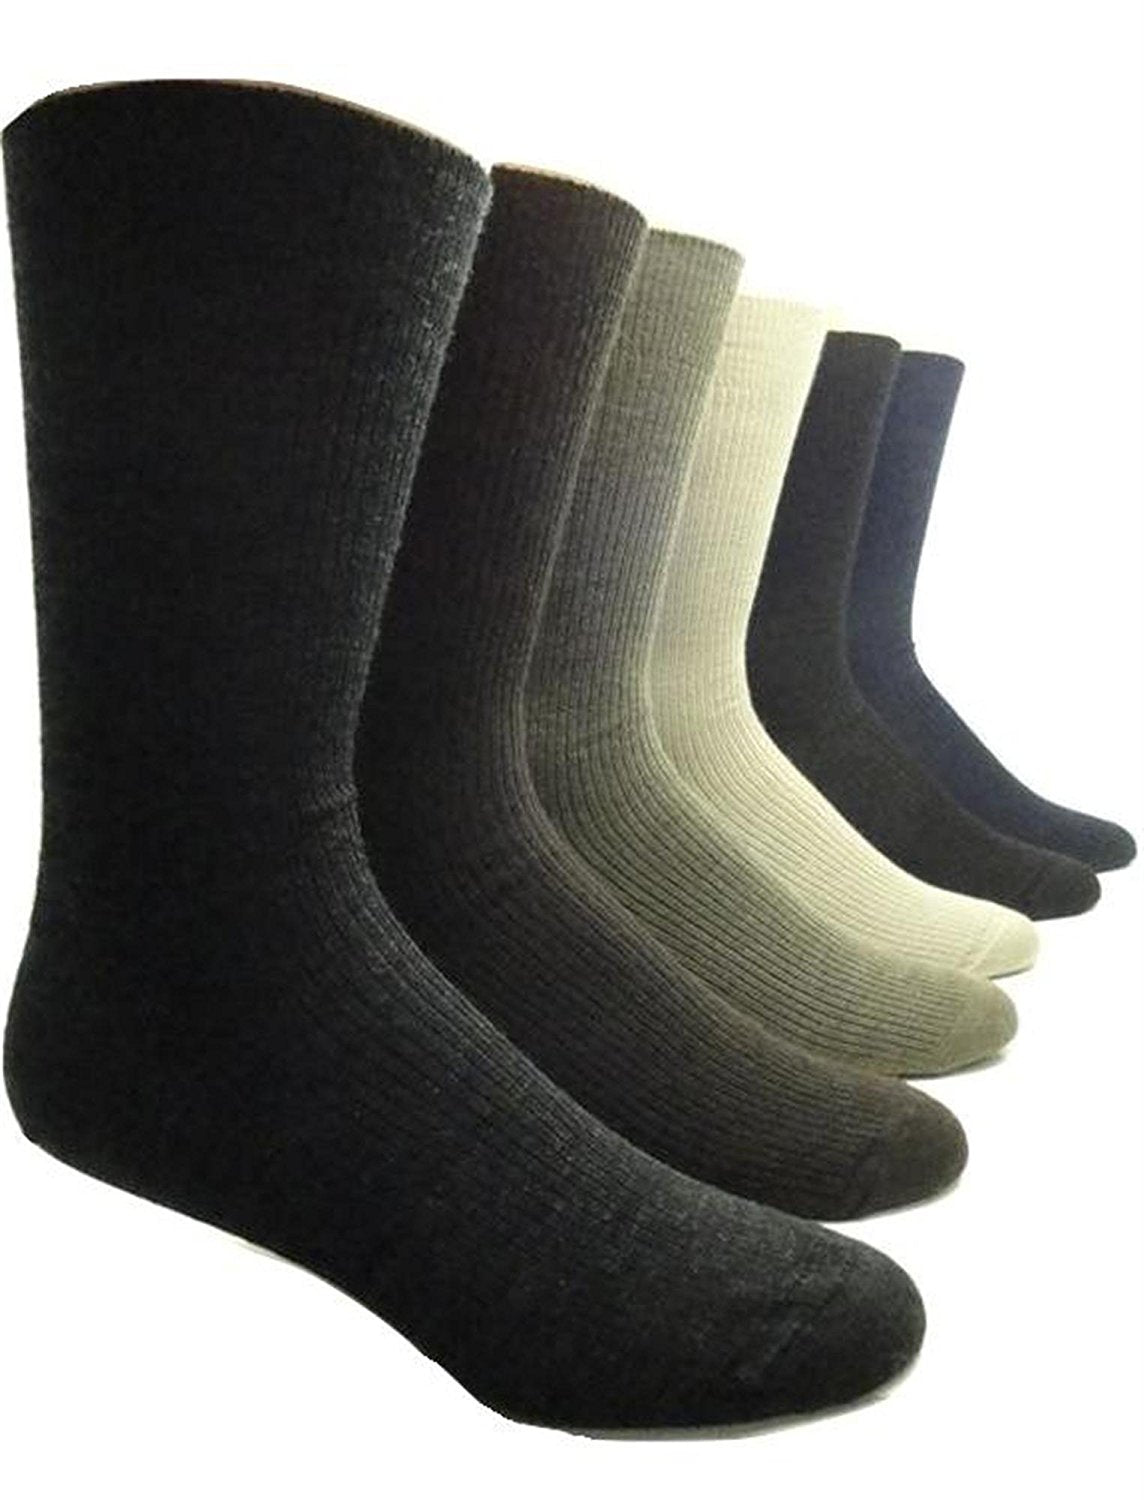 Non-elastic socks